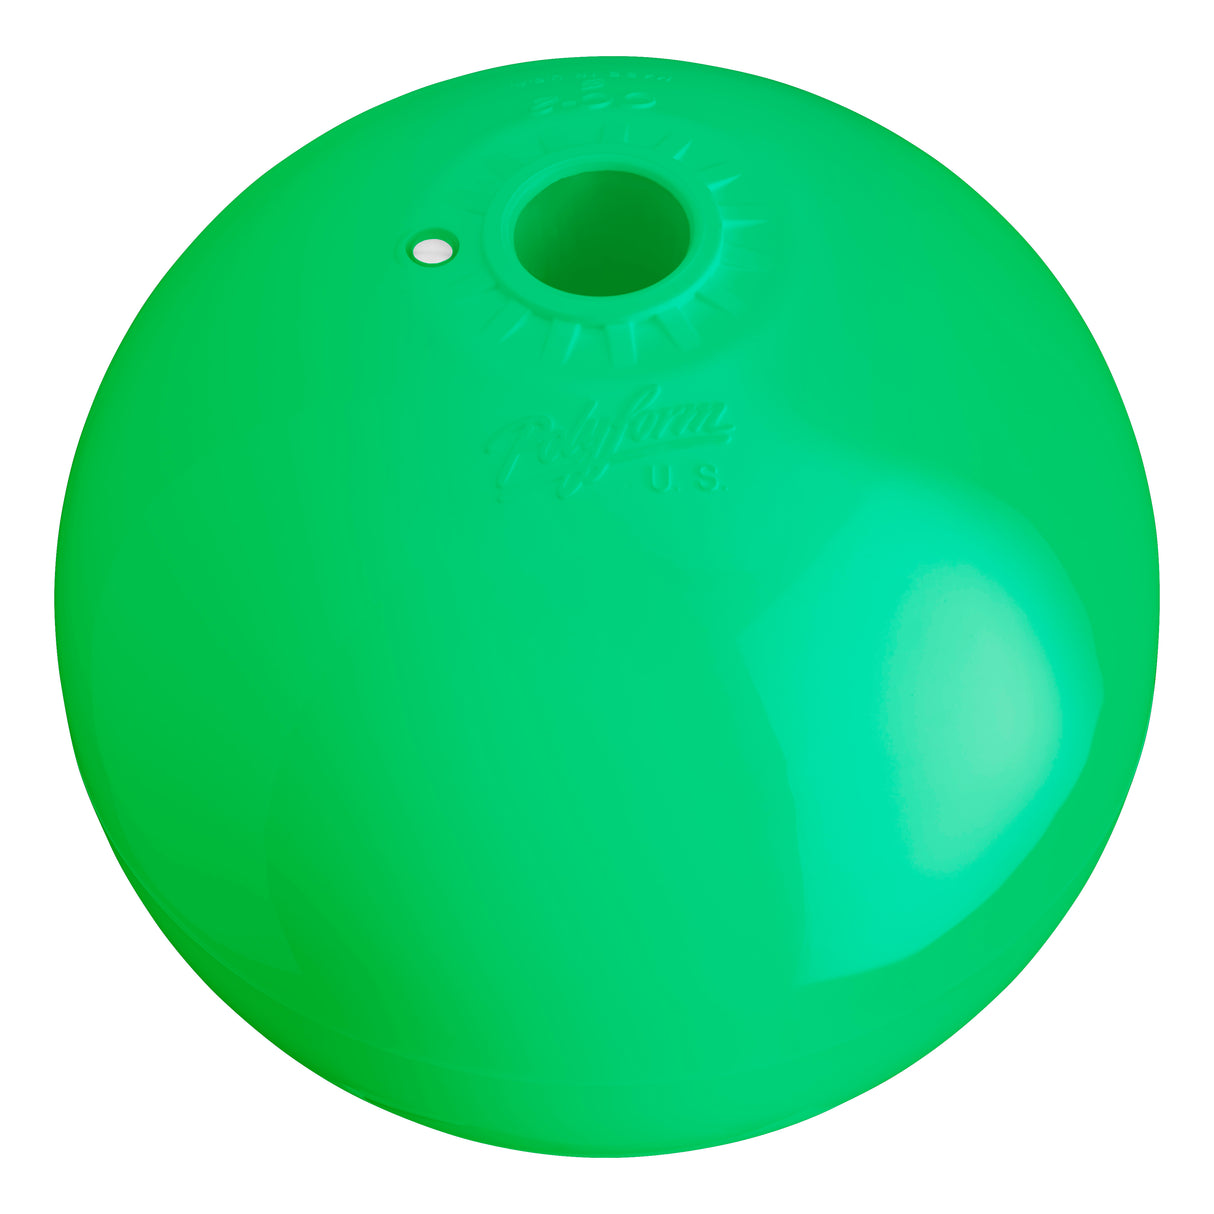 Hole through center mooring and marker buoy, Polyform CC-4 Green angled shot